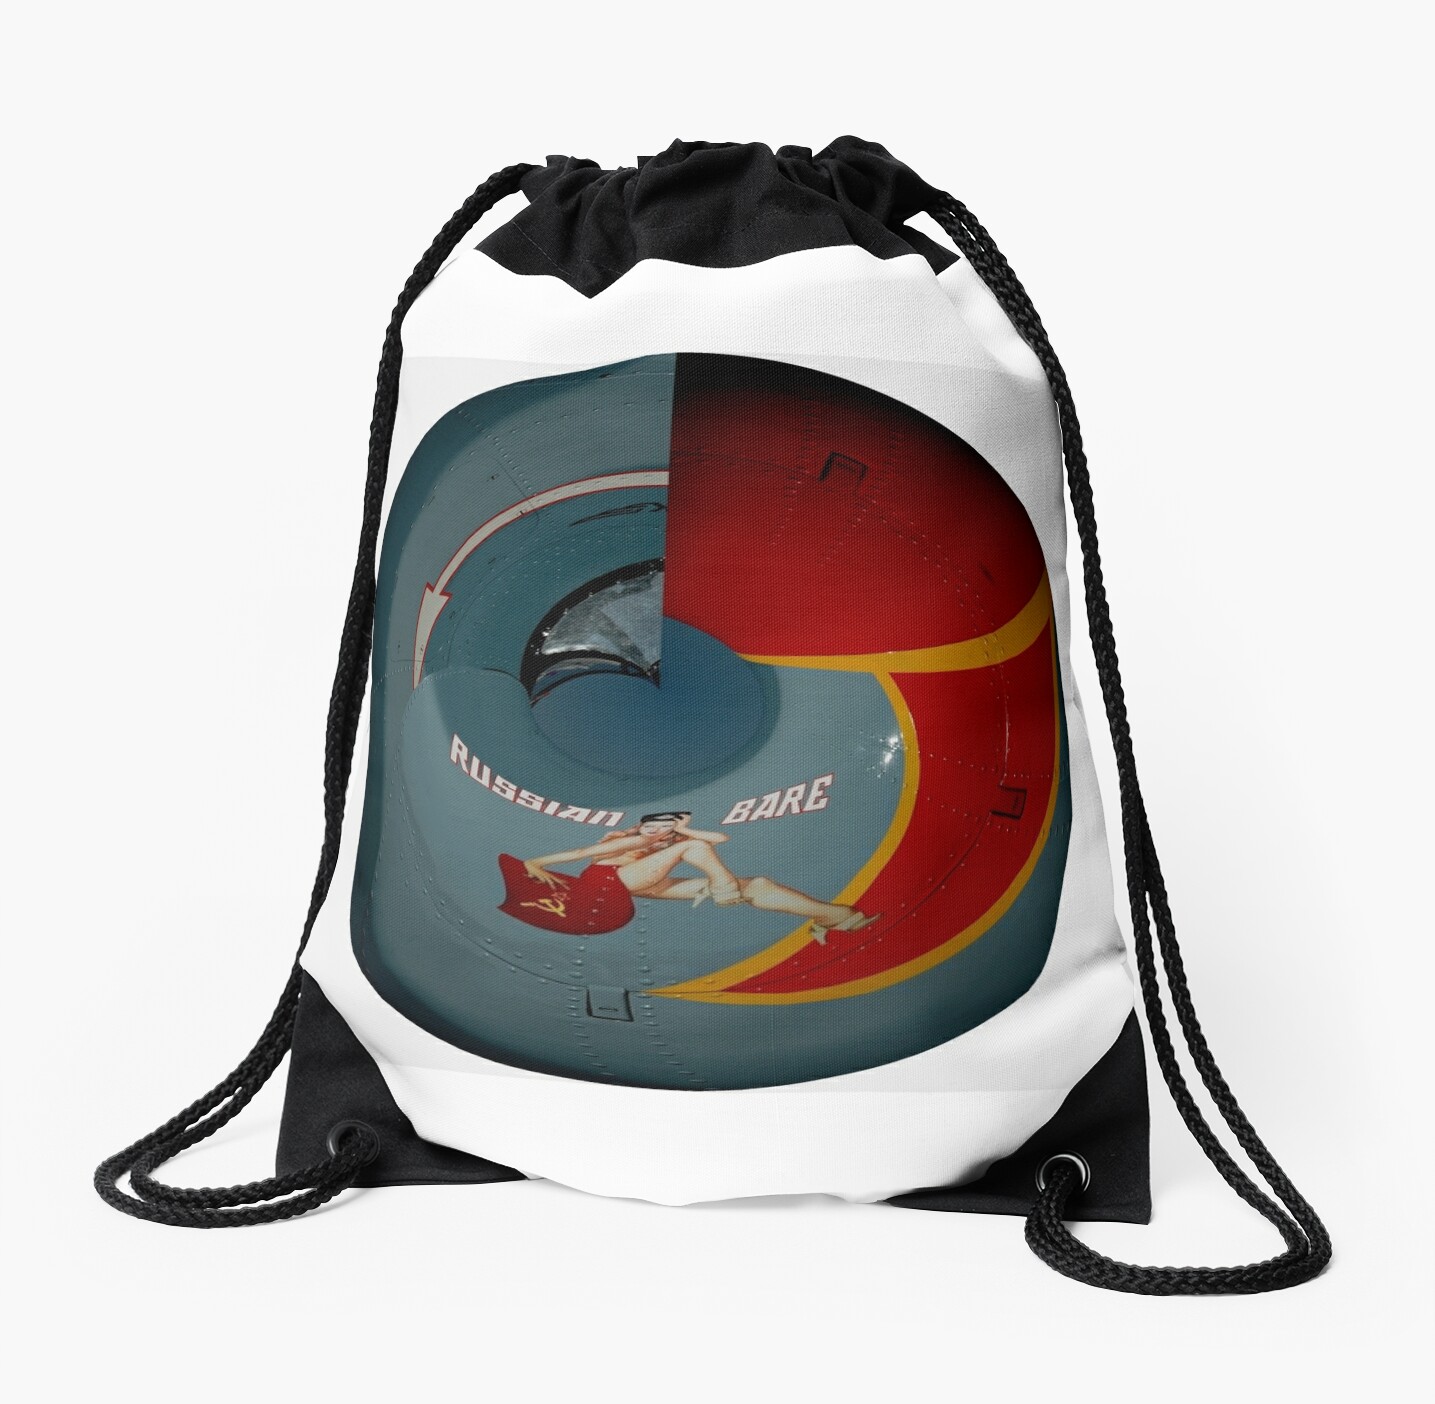 Russian Bare Drawstring Bags By Muz2142 Redbubble